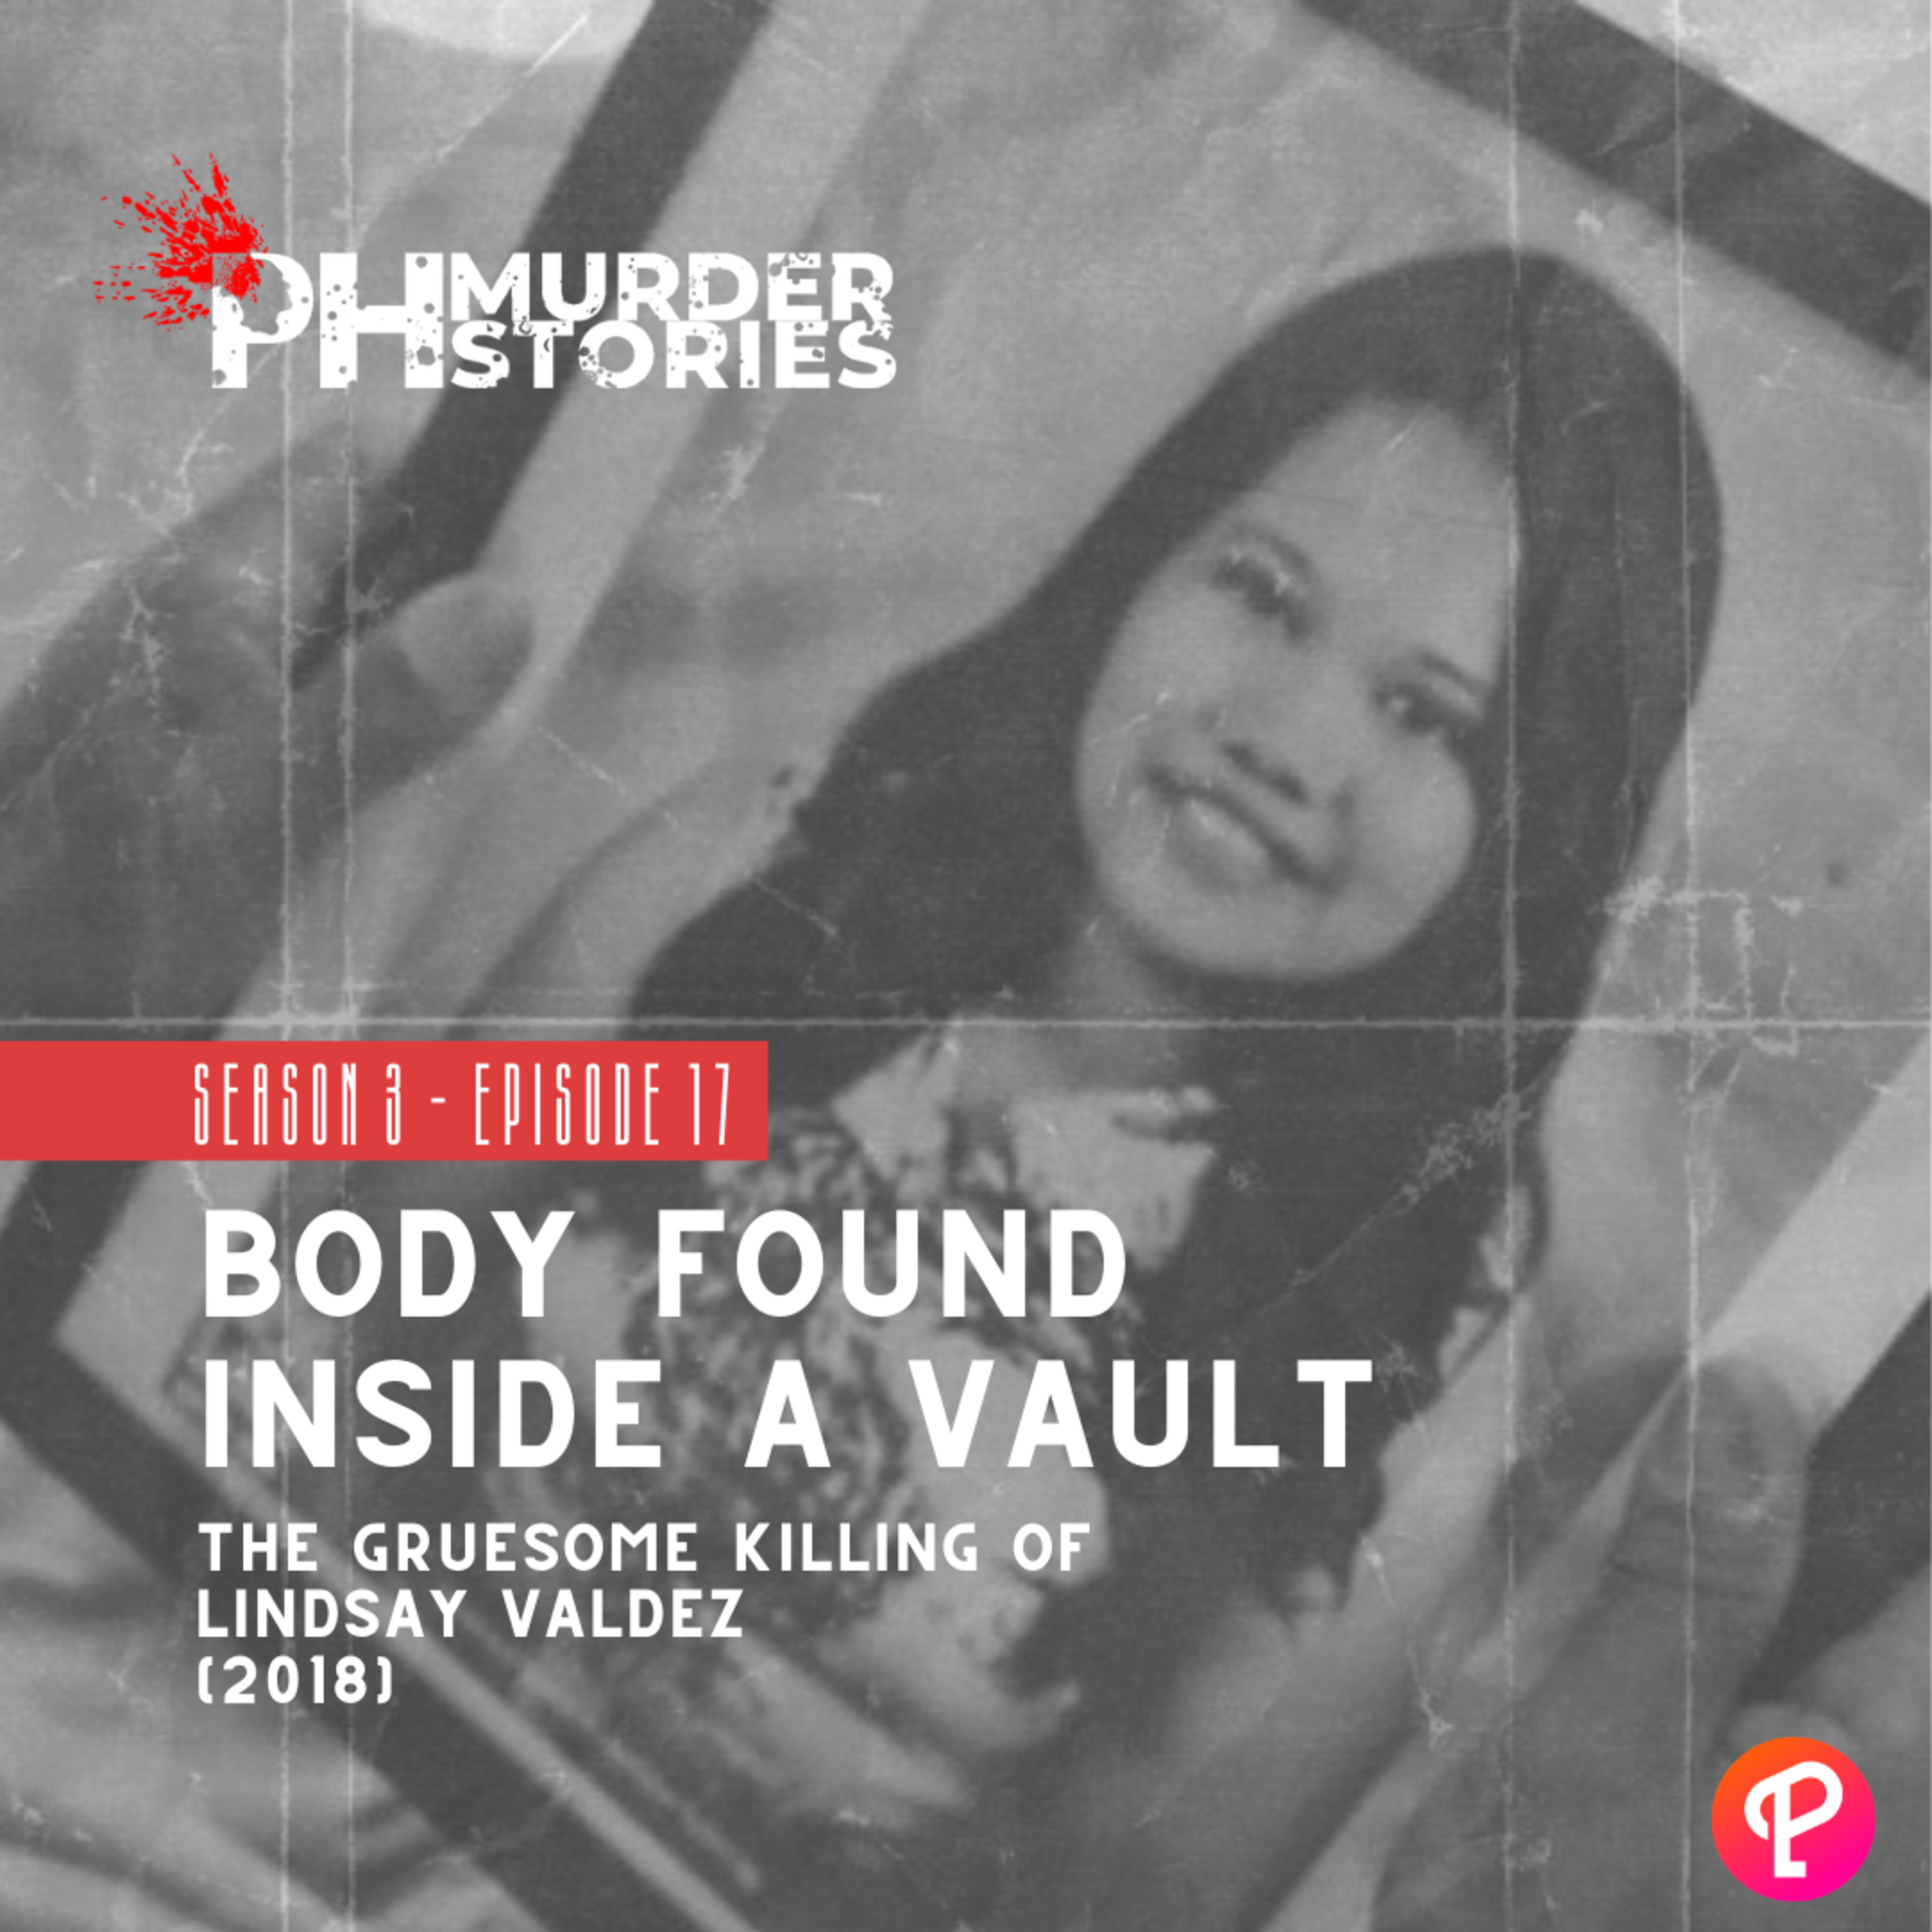 Body Found Inside A Vault: The Gruesome Killing of Lindsay Valdez (2018)